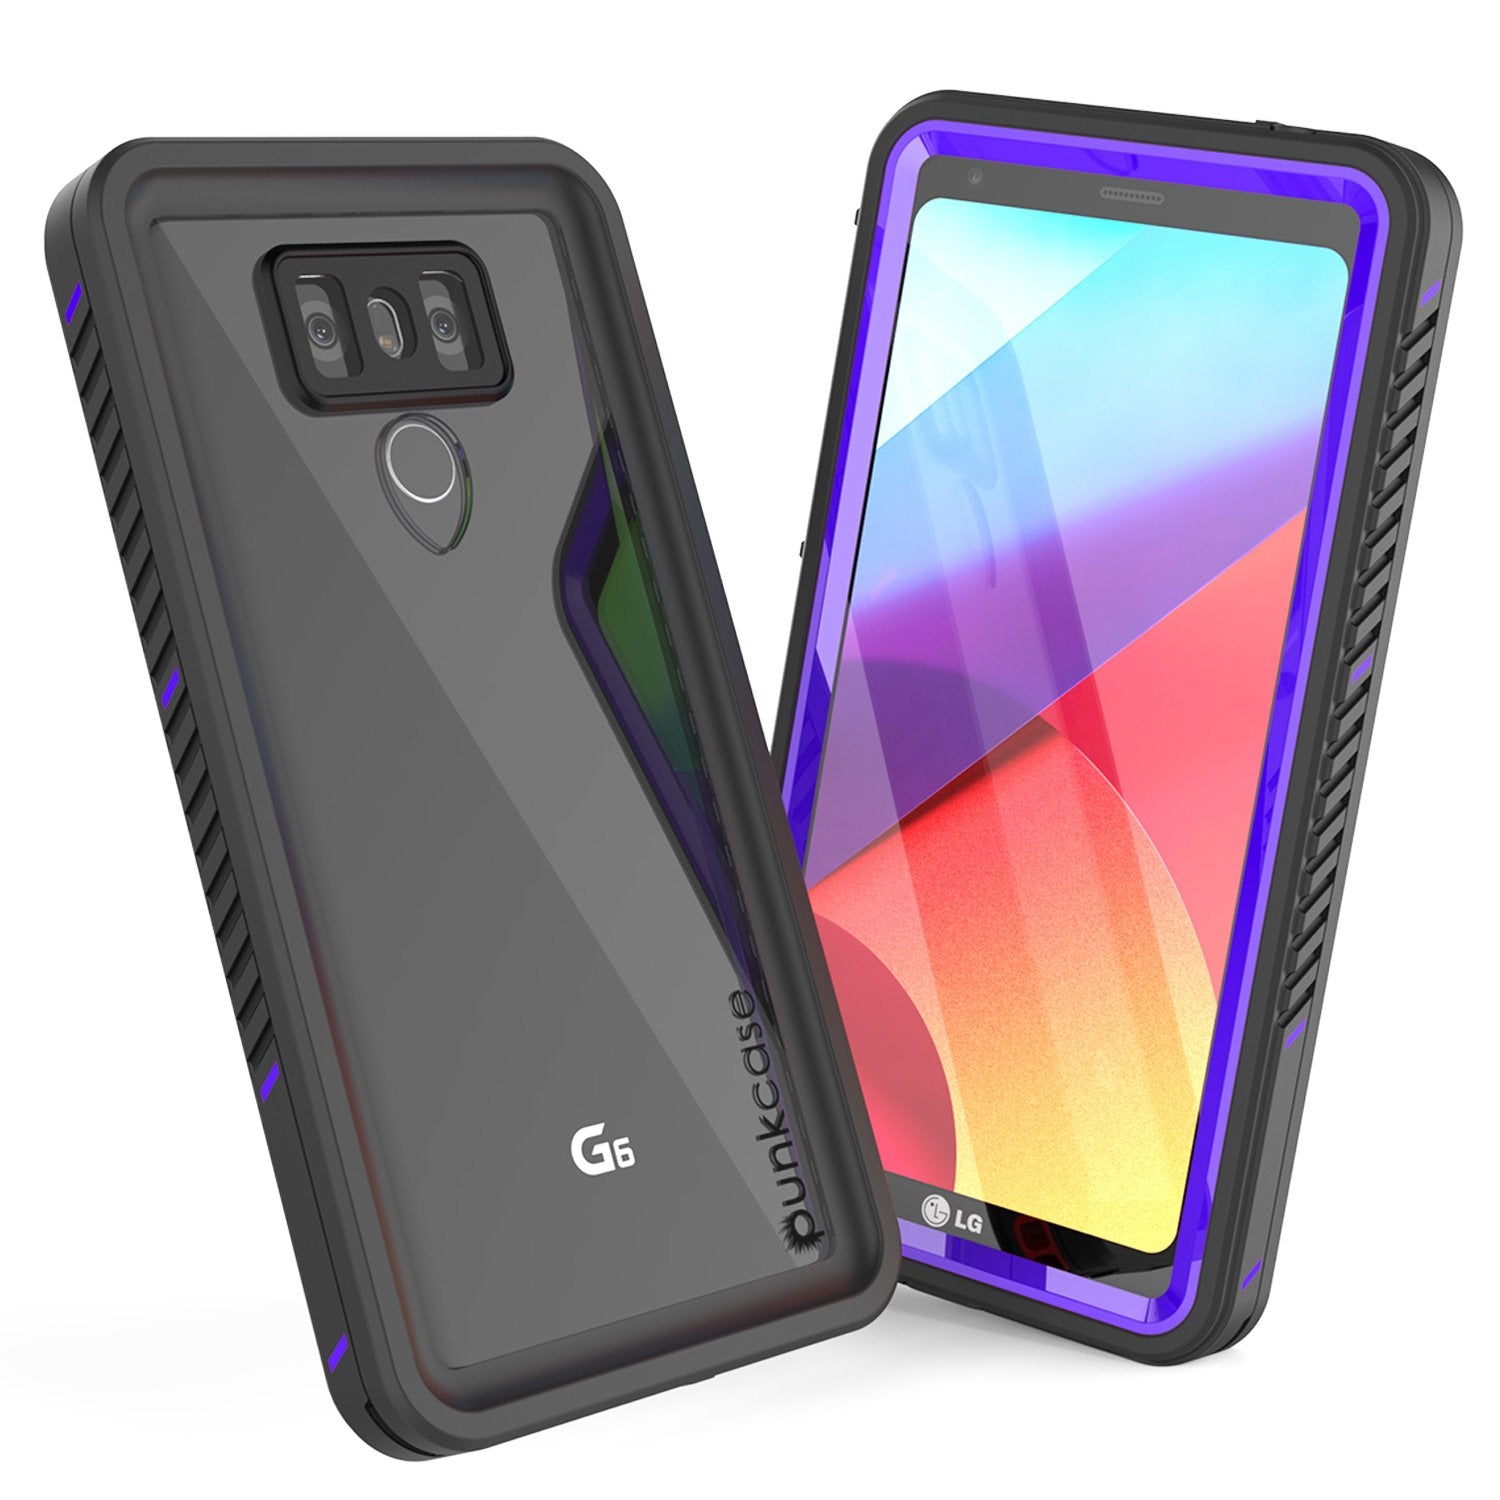 LG G6 Waterproof Case, Punkcase [Extreme Series] [Slim Fit] [IP68 Certified] [Shockproof] [Snowproof] [Dirproof] Armor Cover W/ Built In Screen Protector for LG G6 [PURPLE]